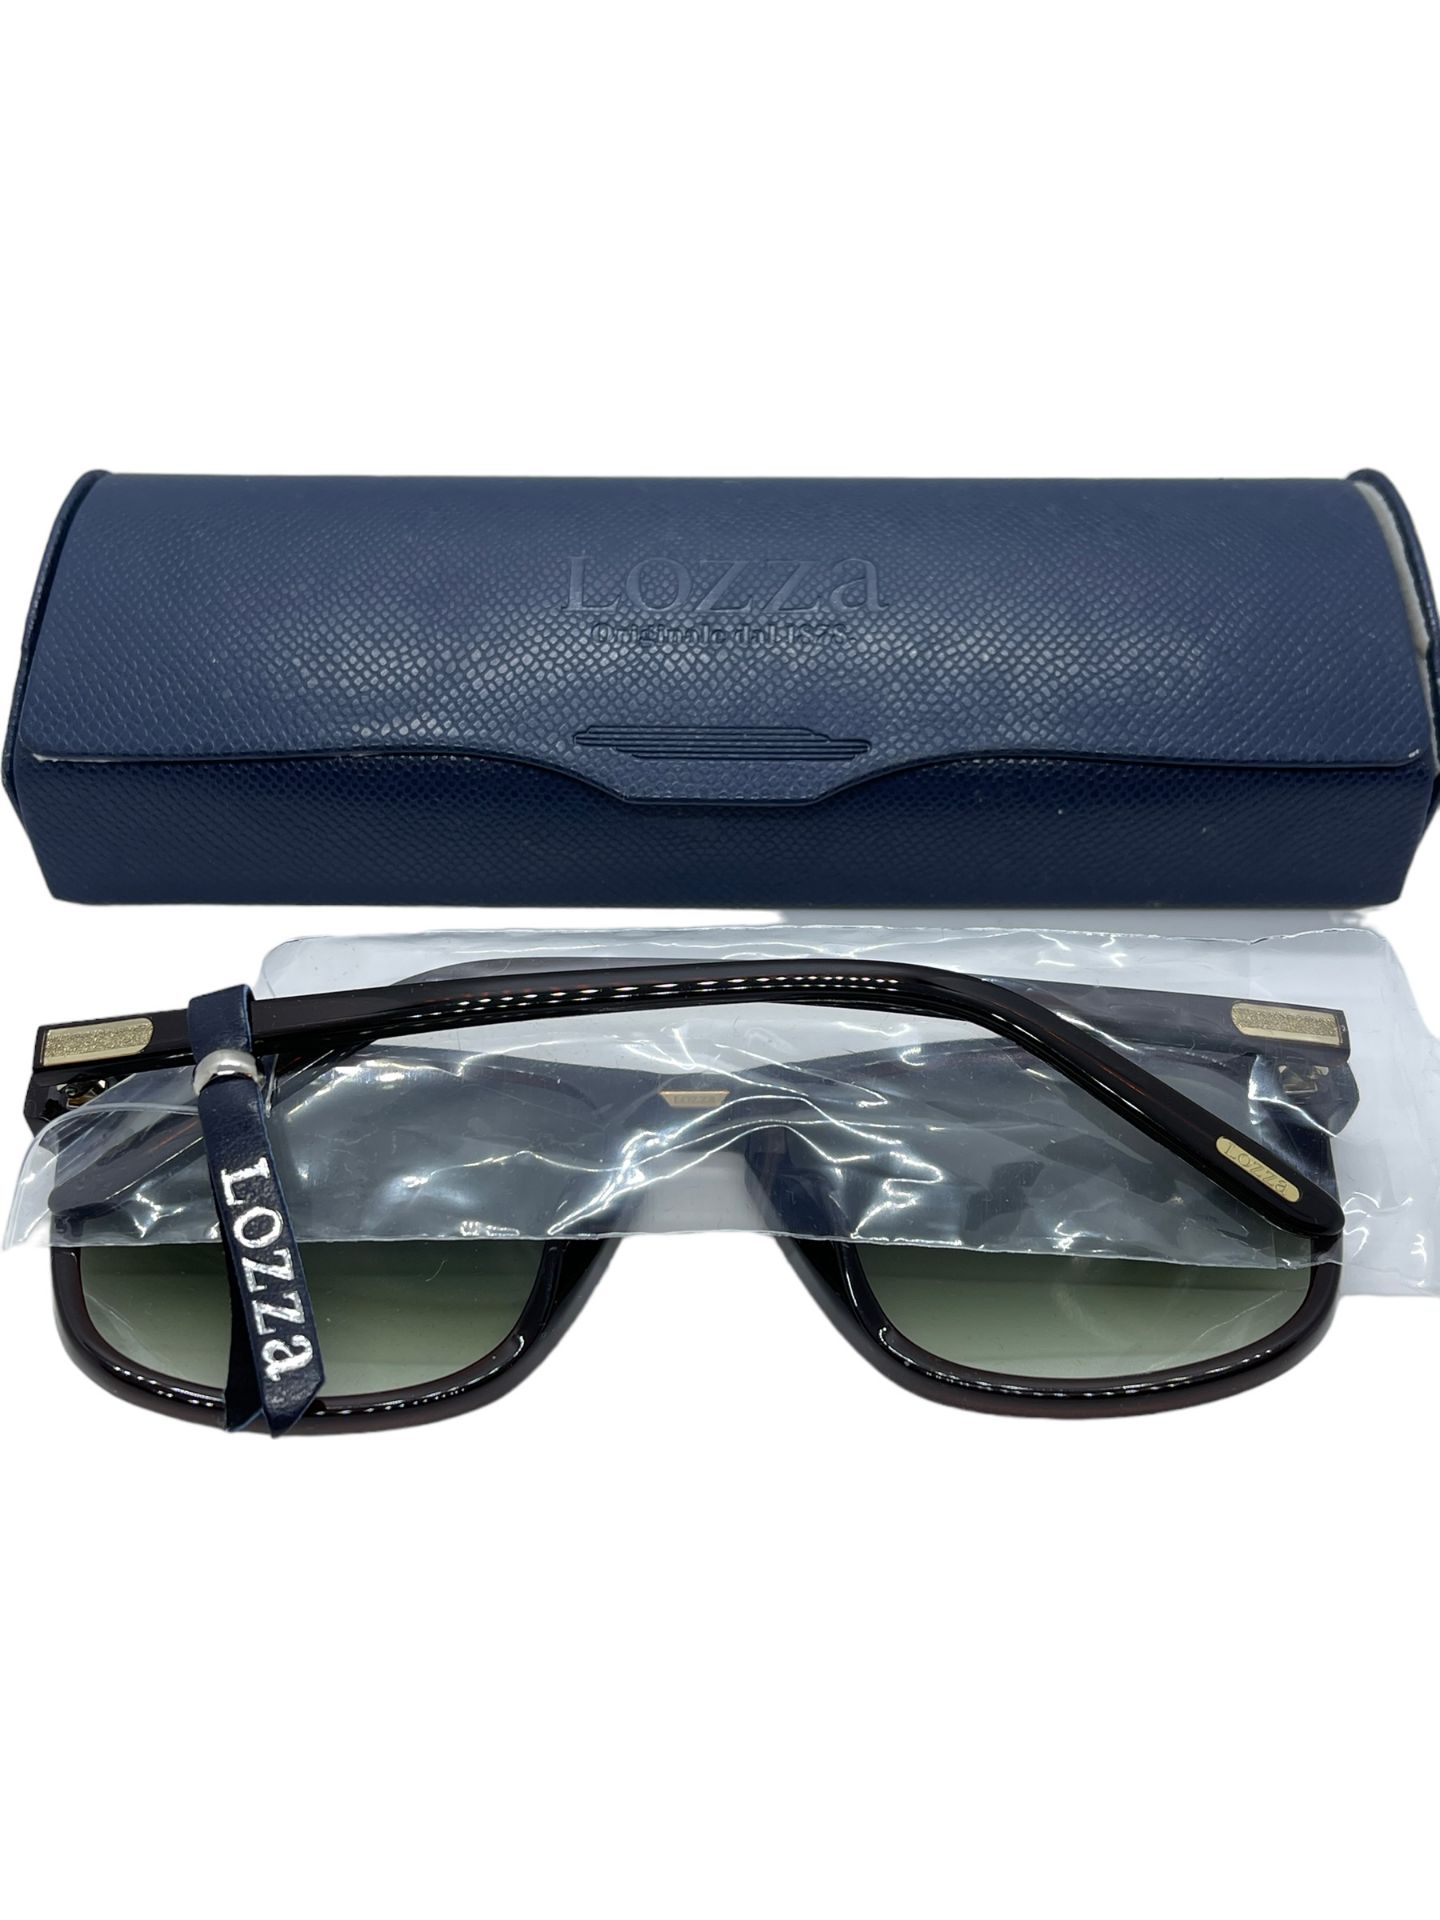 Lozza men's sunglasses boxed brand new - Bild 3 aus 4